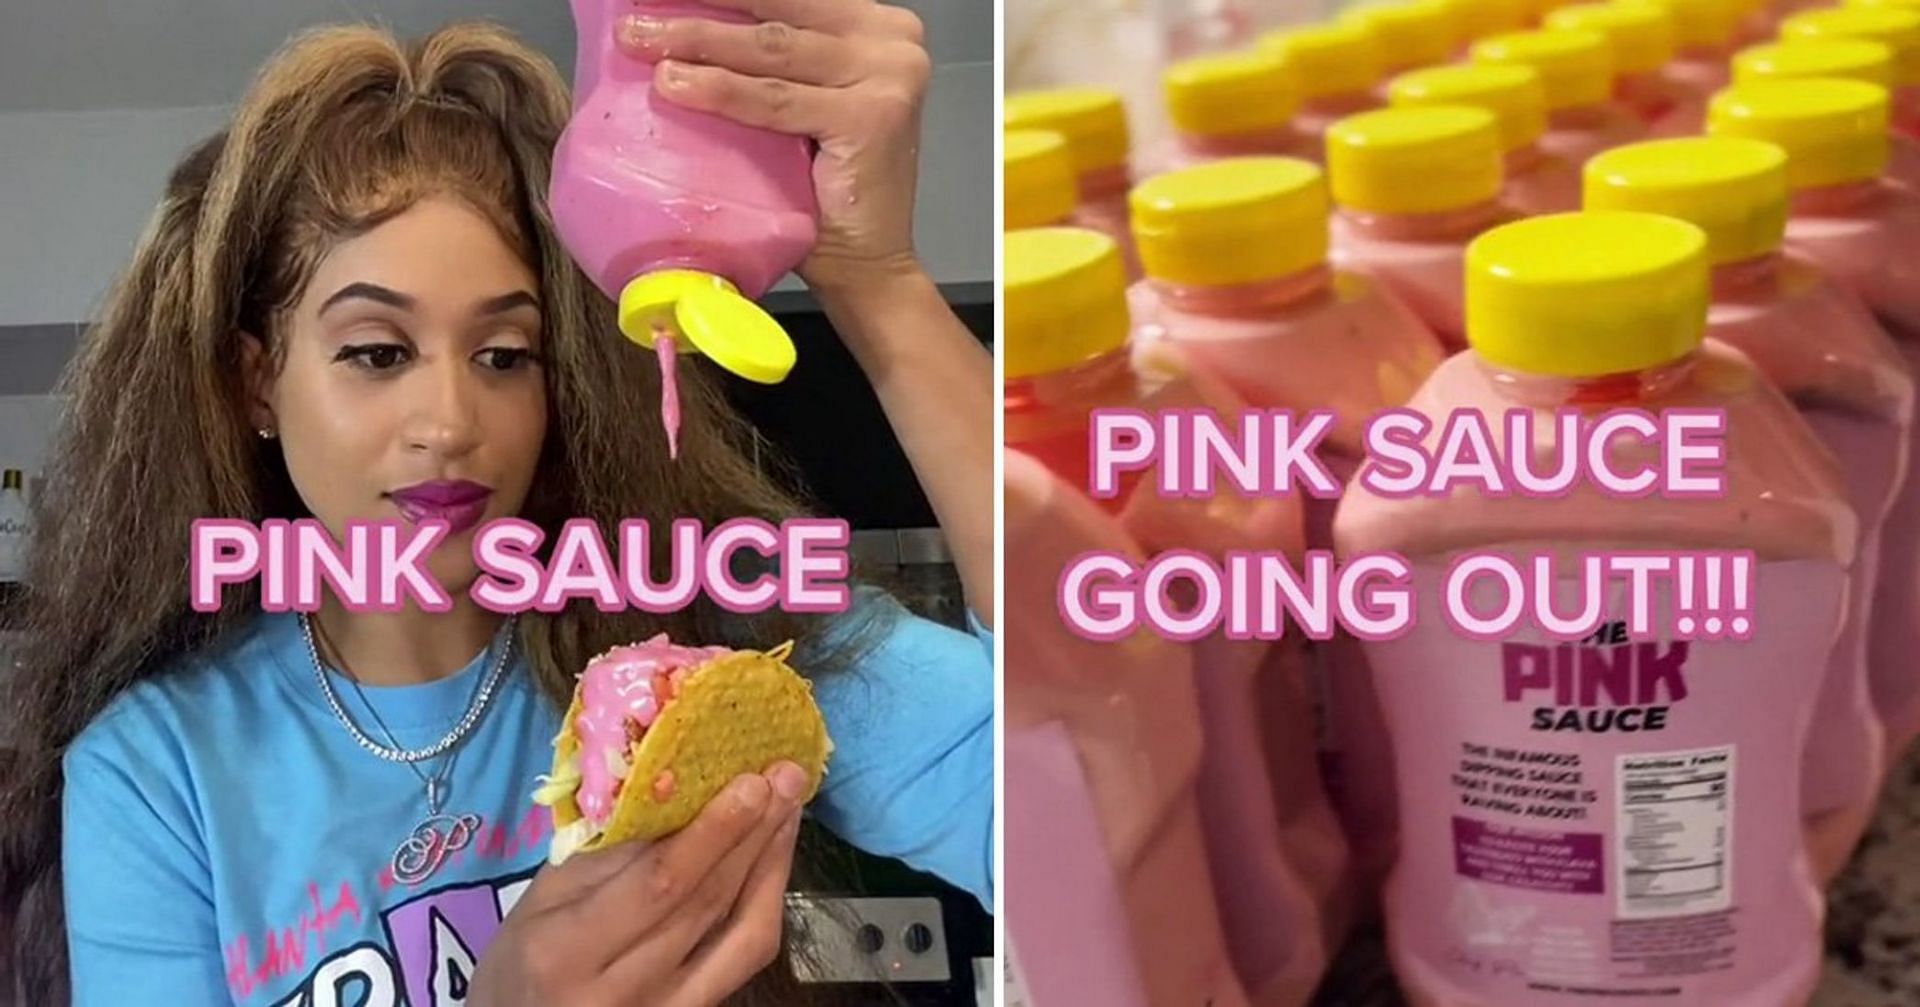 Food experts claim Pink Sauce may cause botulism (Image via cheff.pii/TikTok)